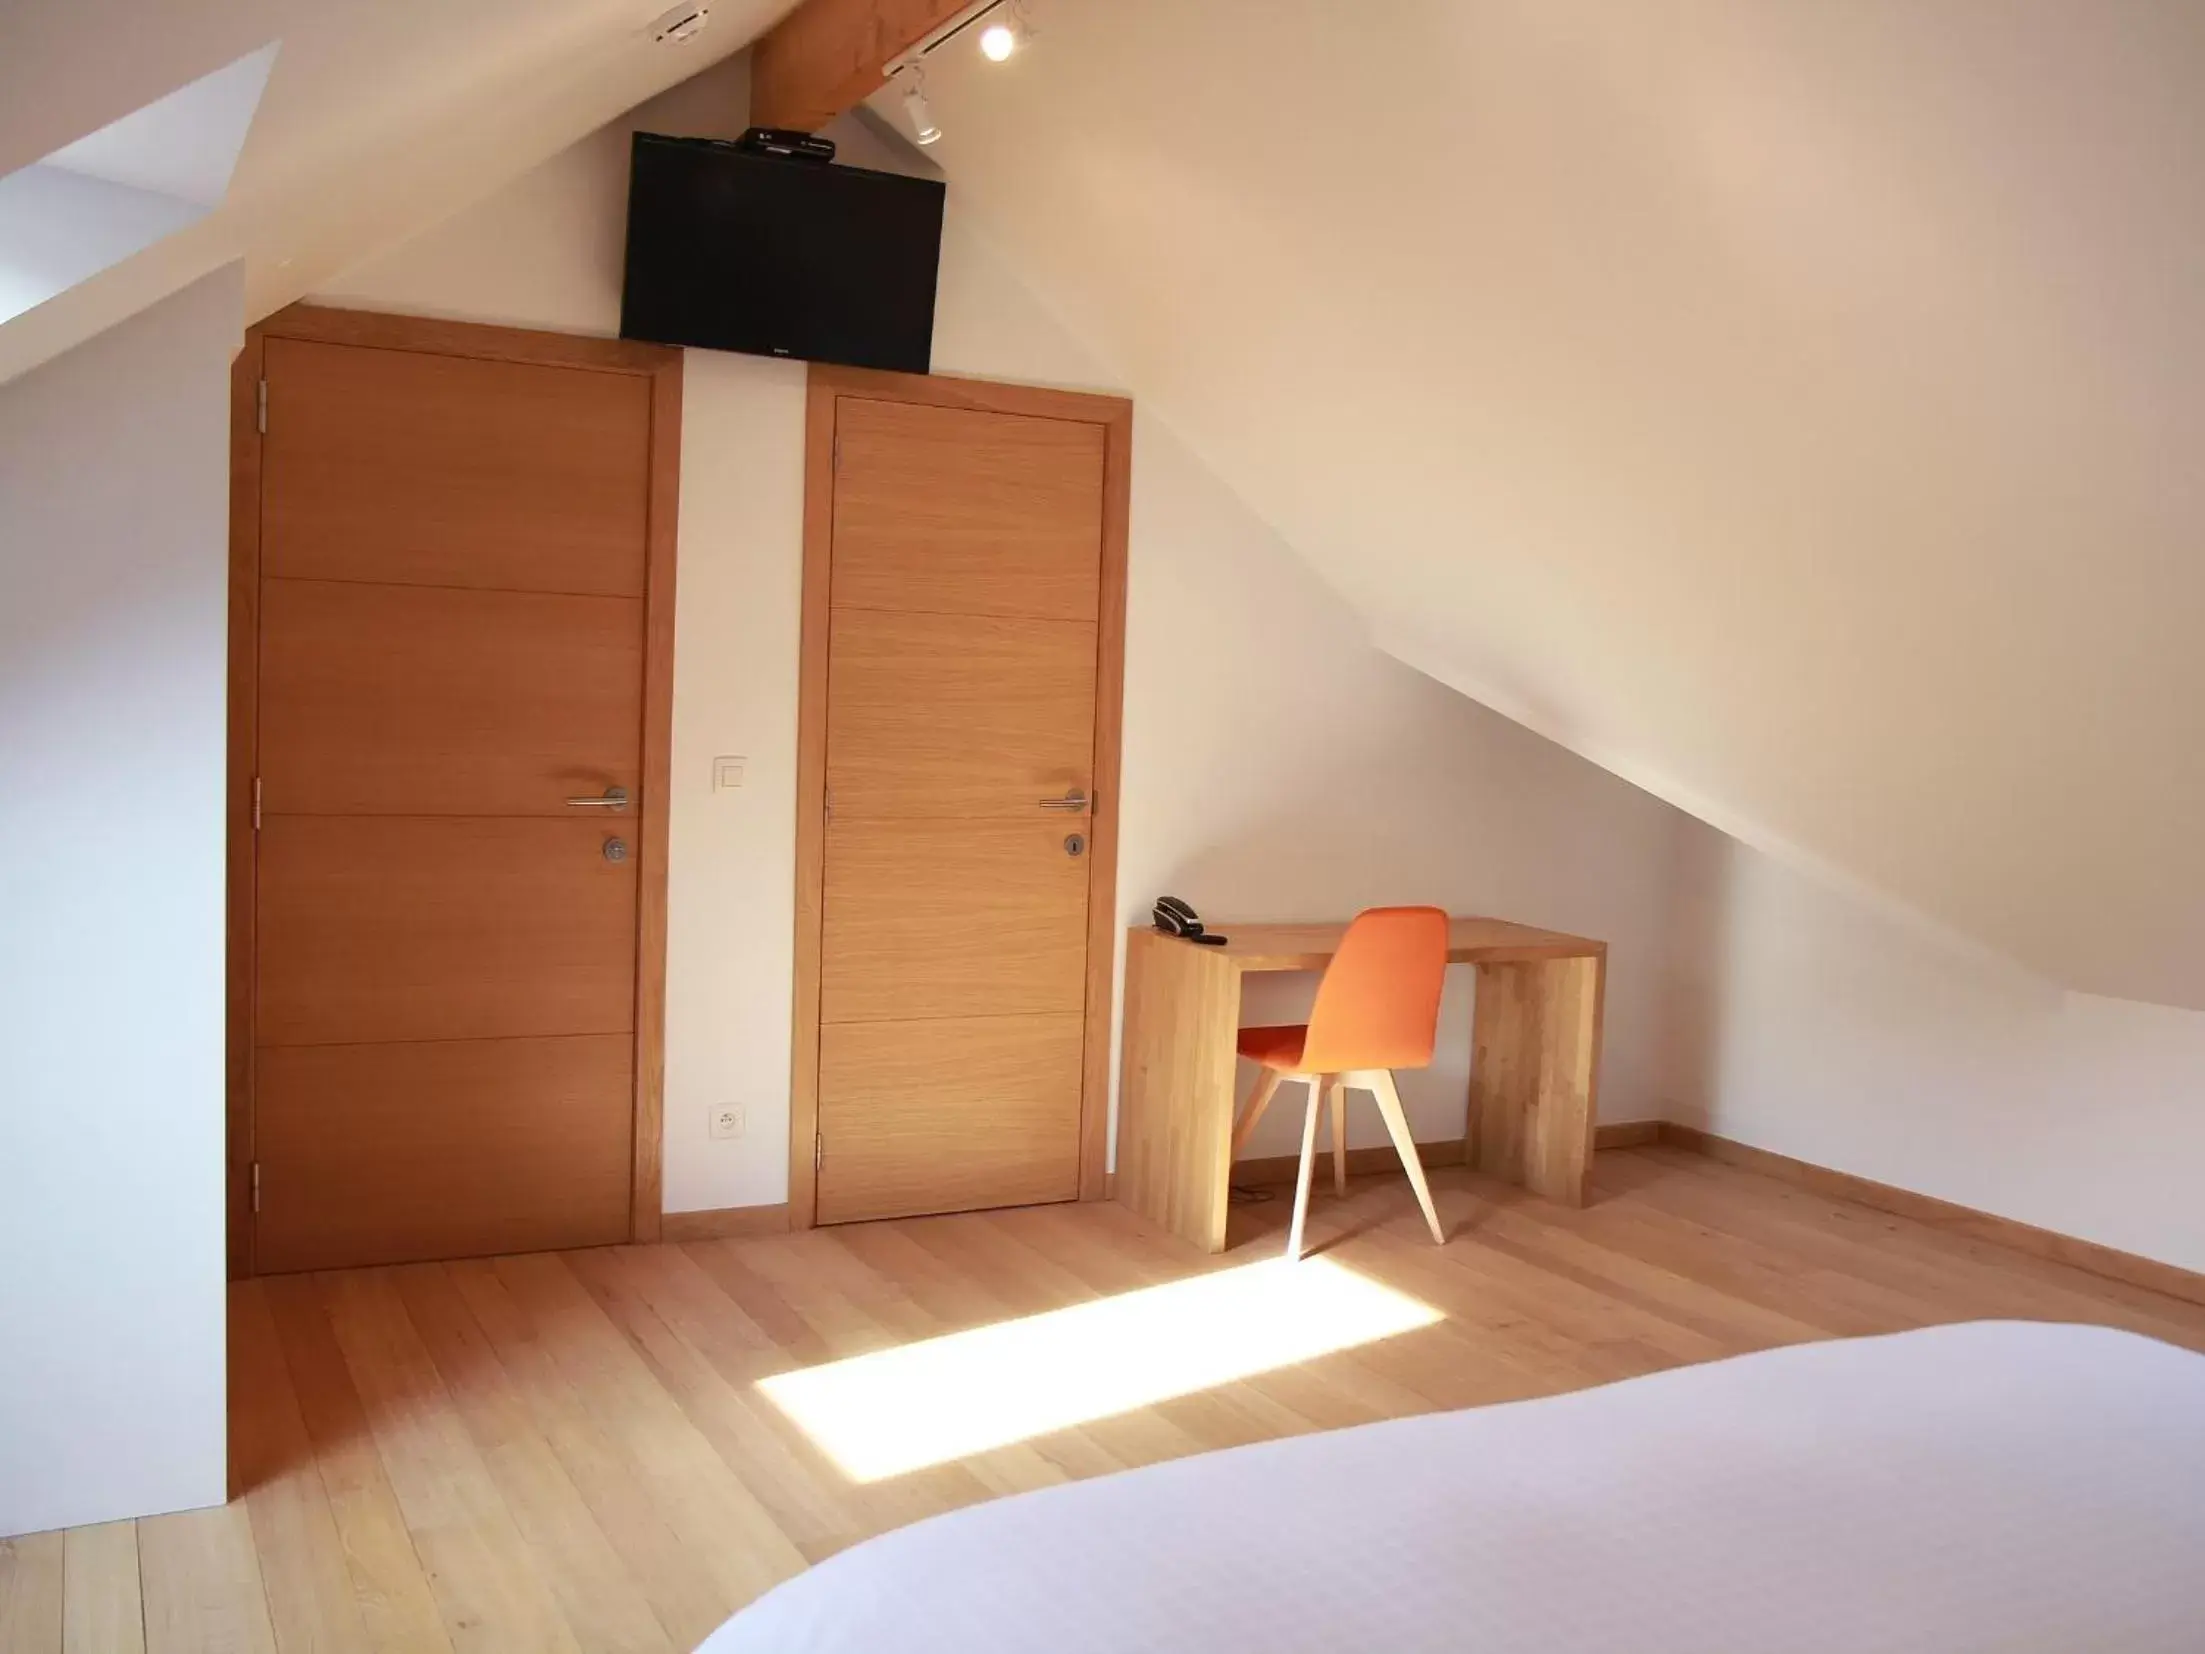 Bedroom, Bed in Hôtel - Ferme du Château d'Ahin